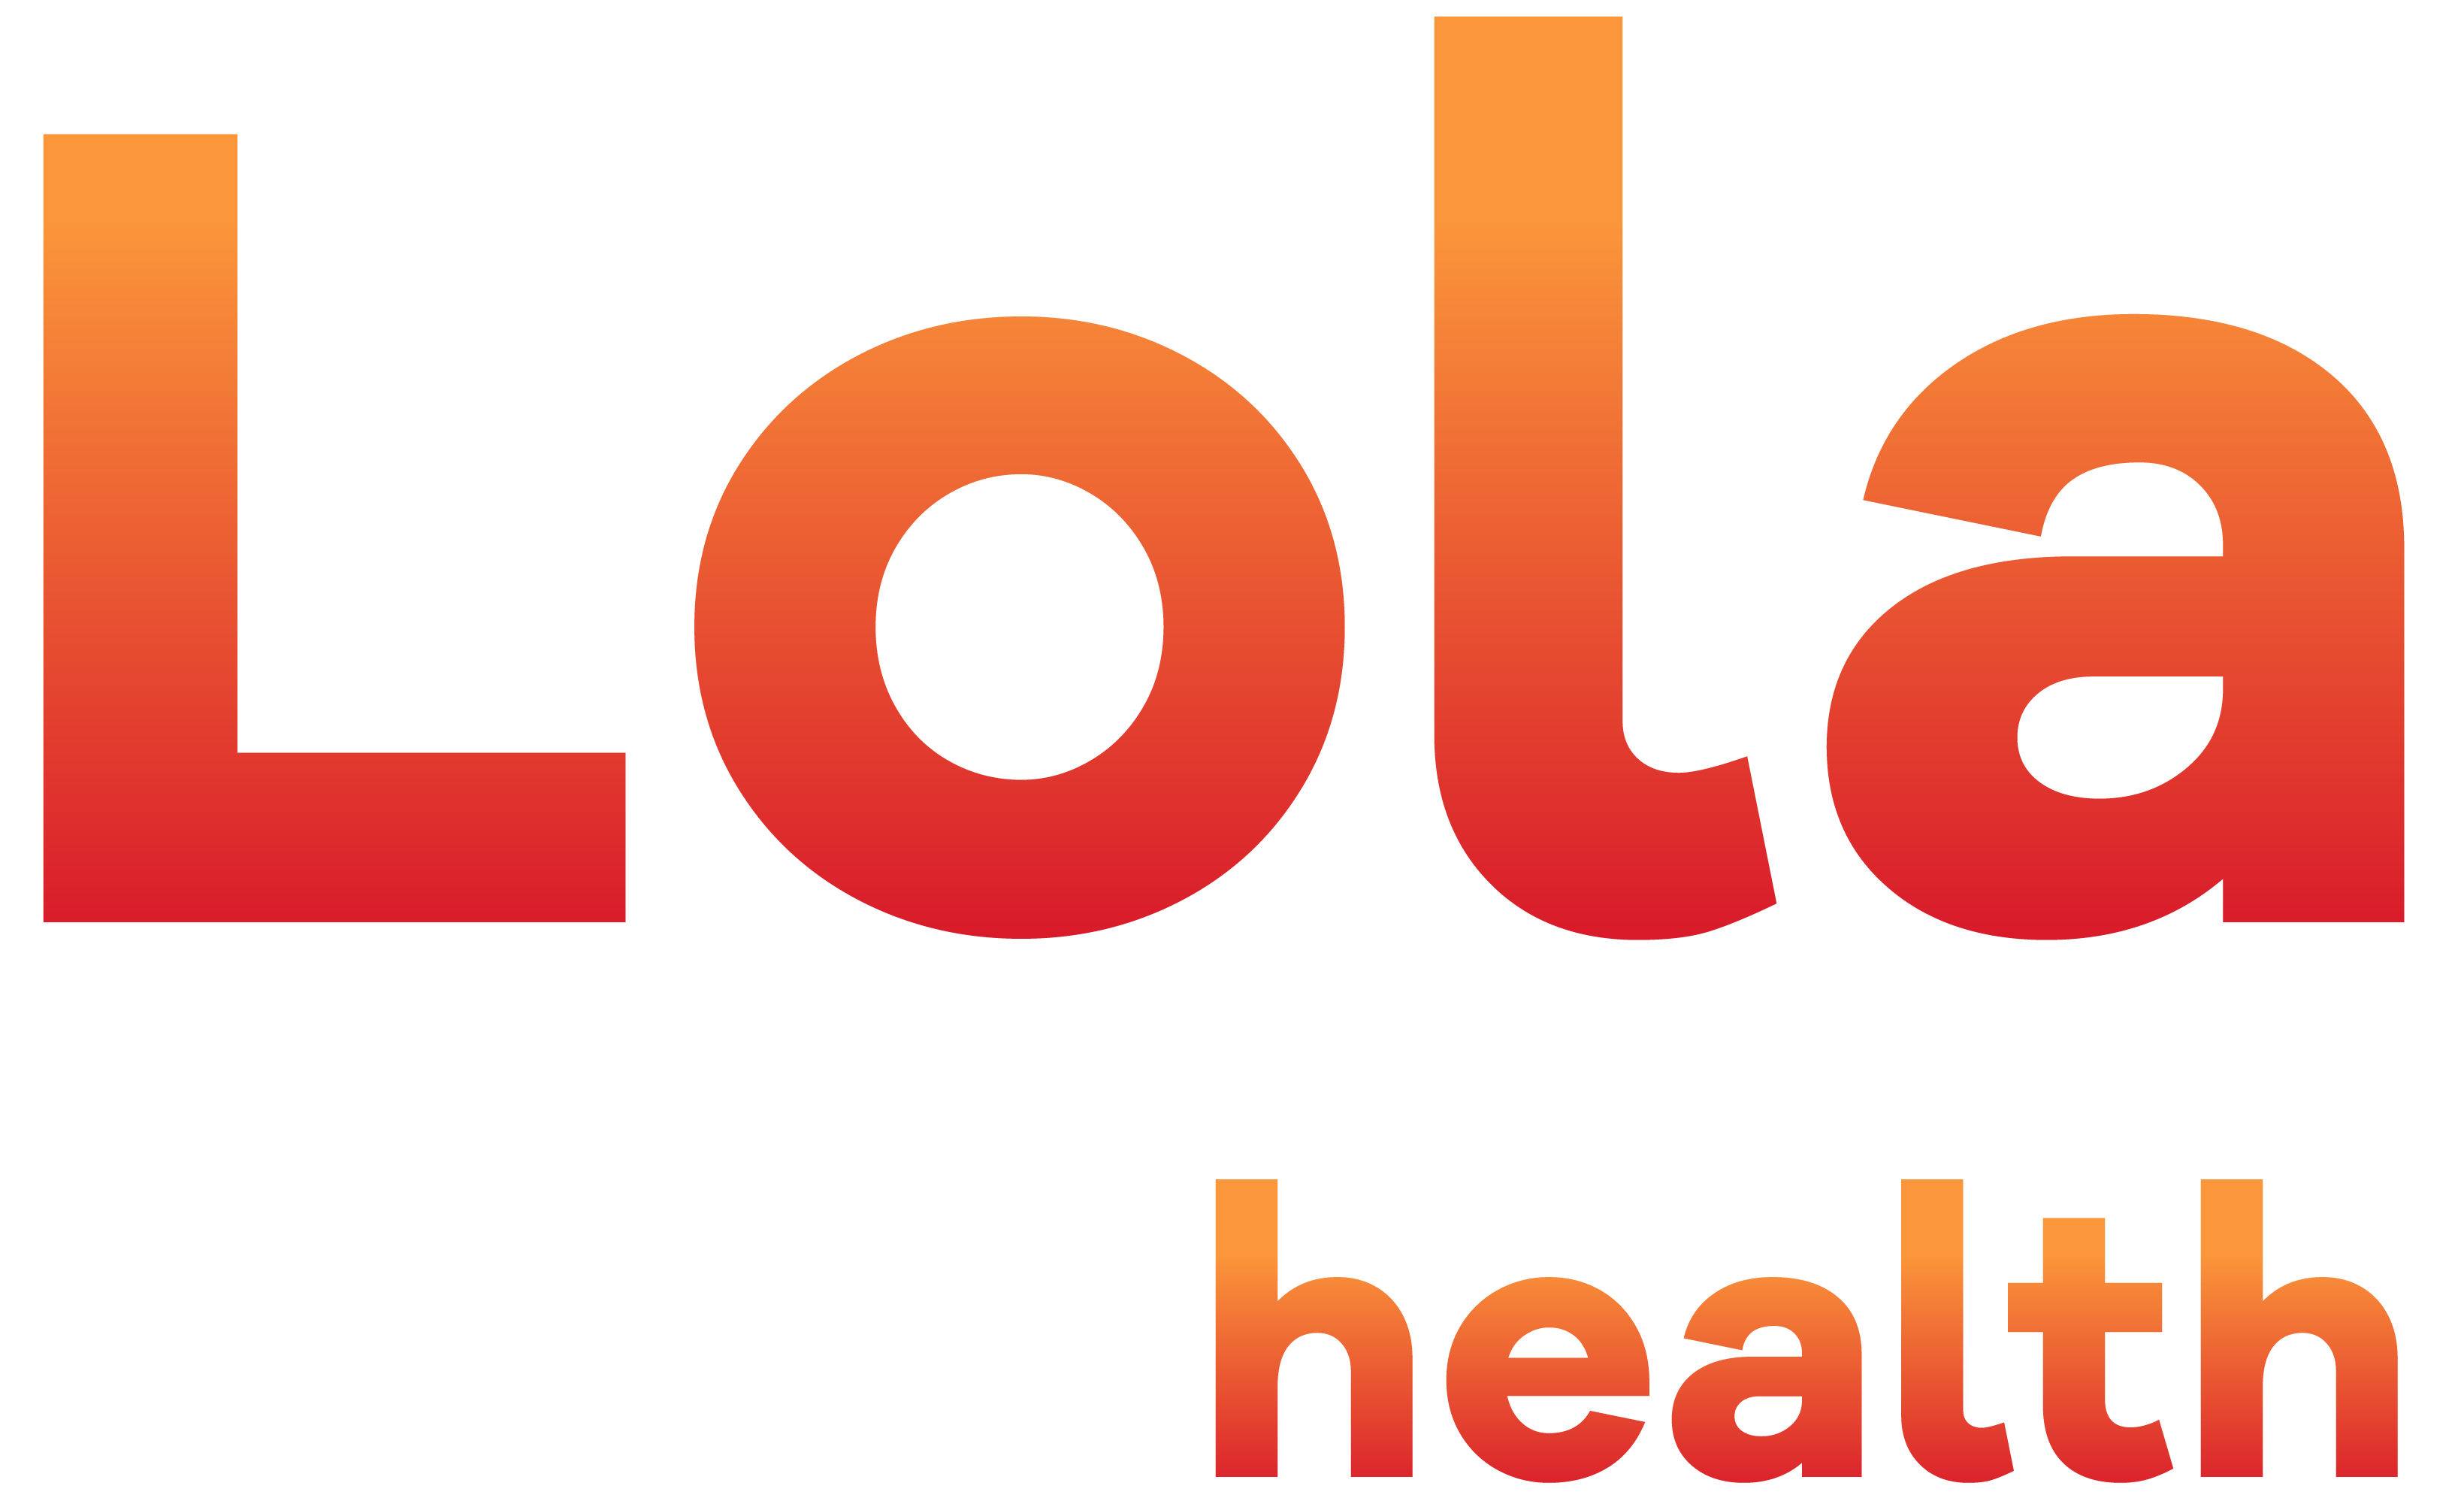 Le blog Lola Health